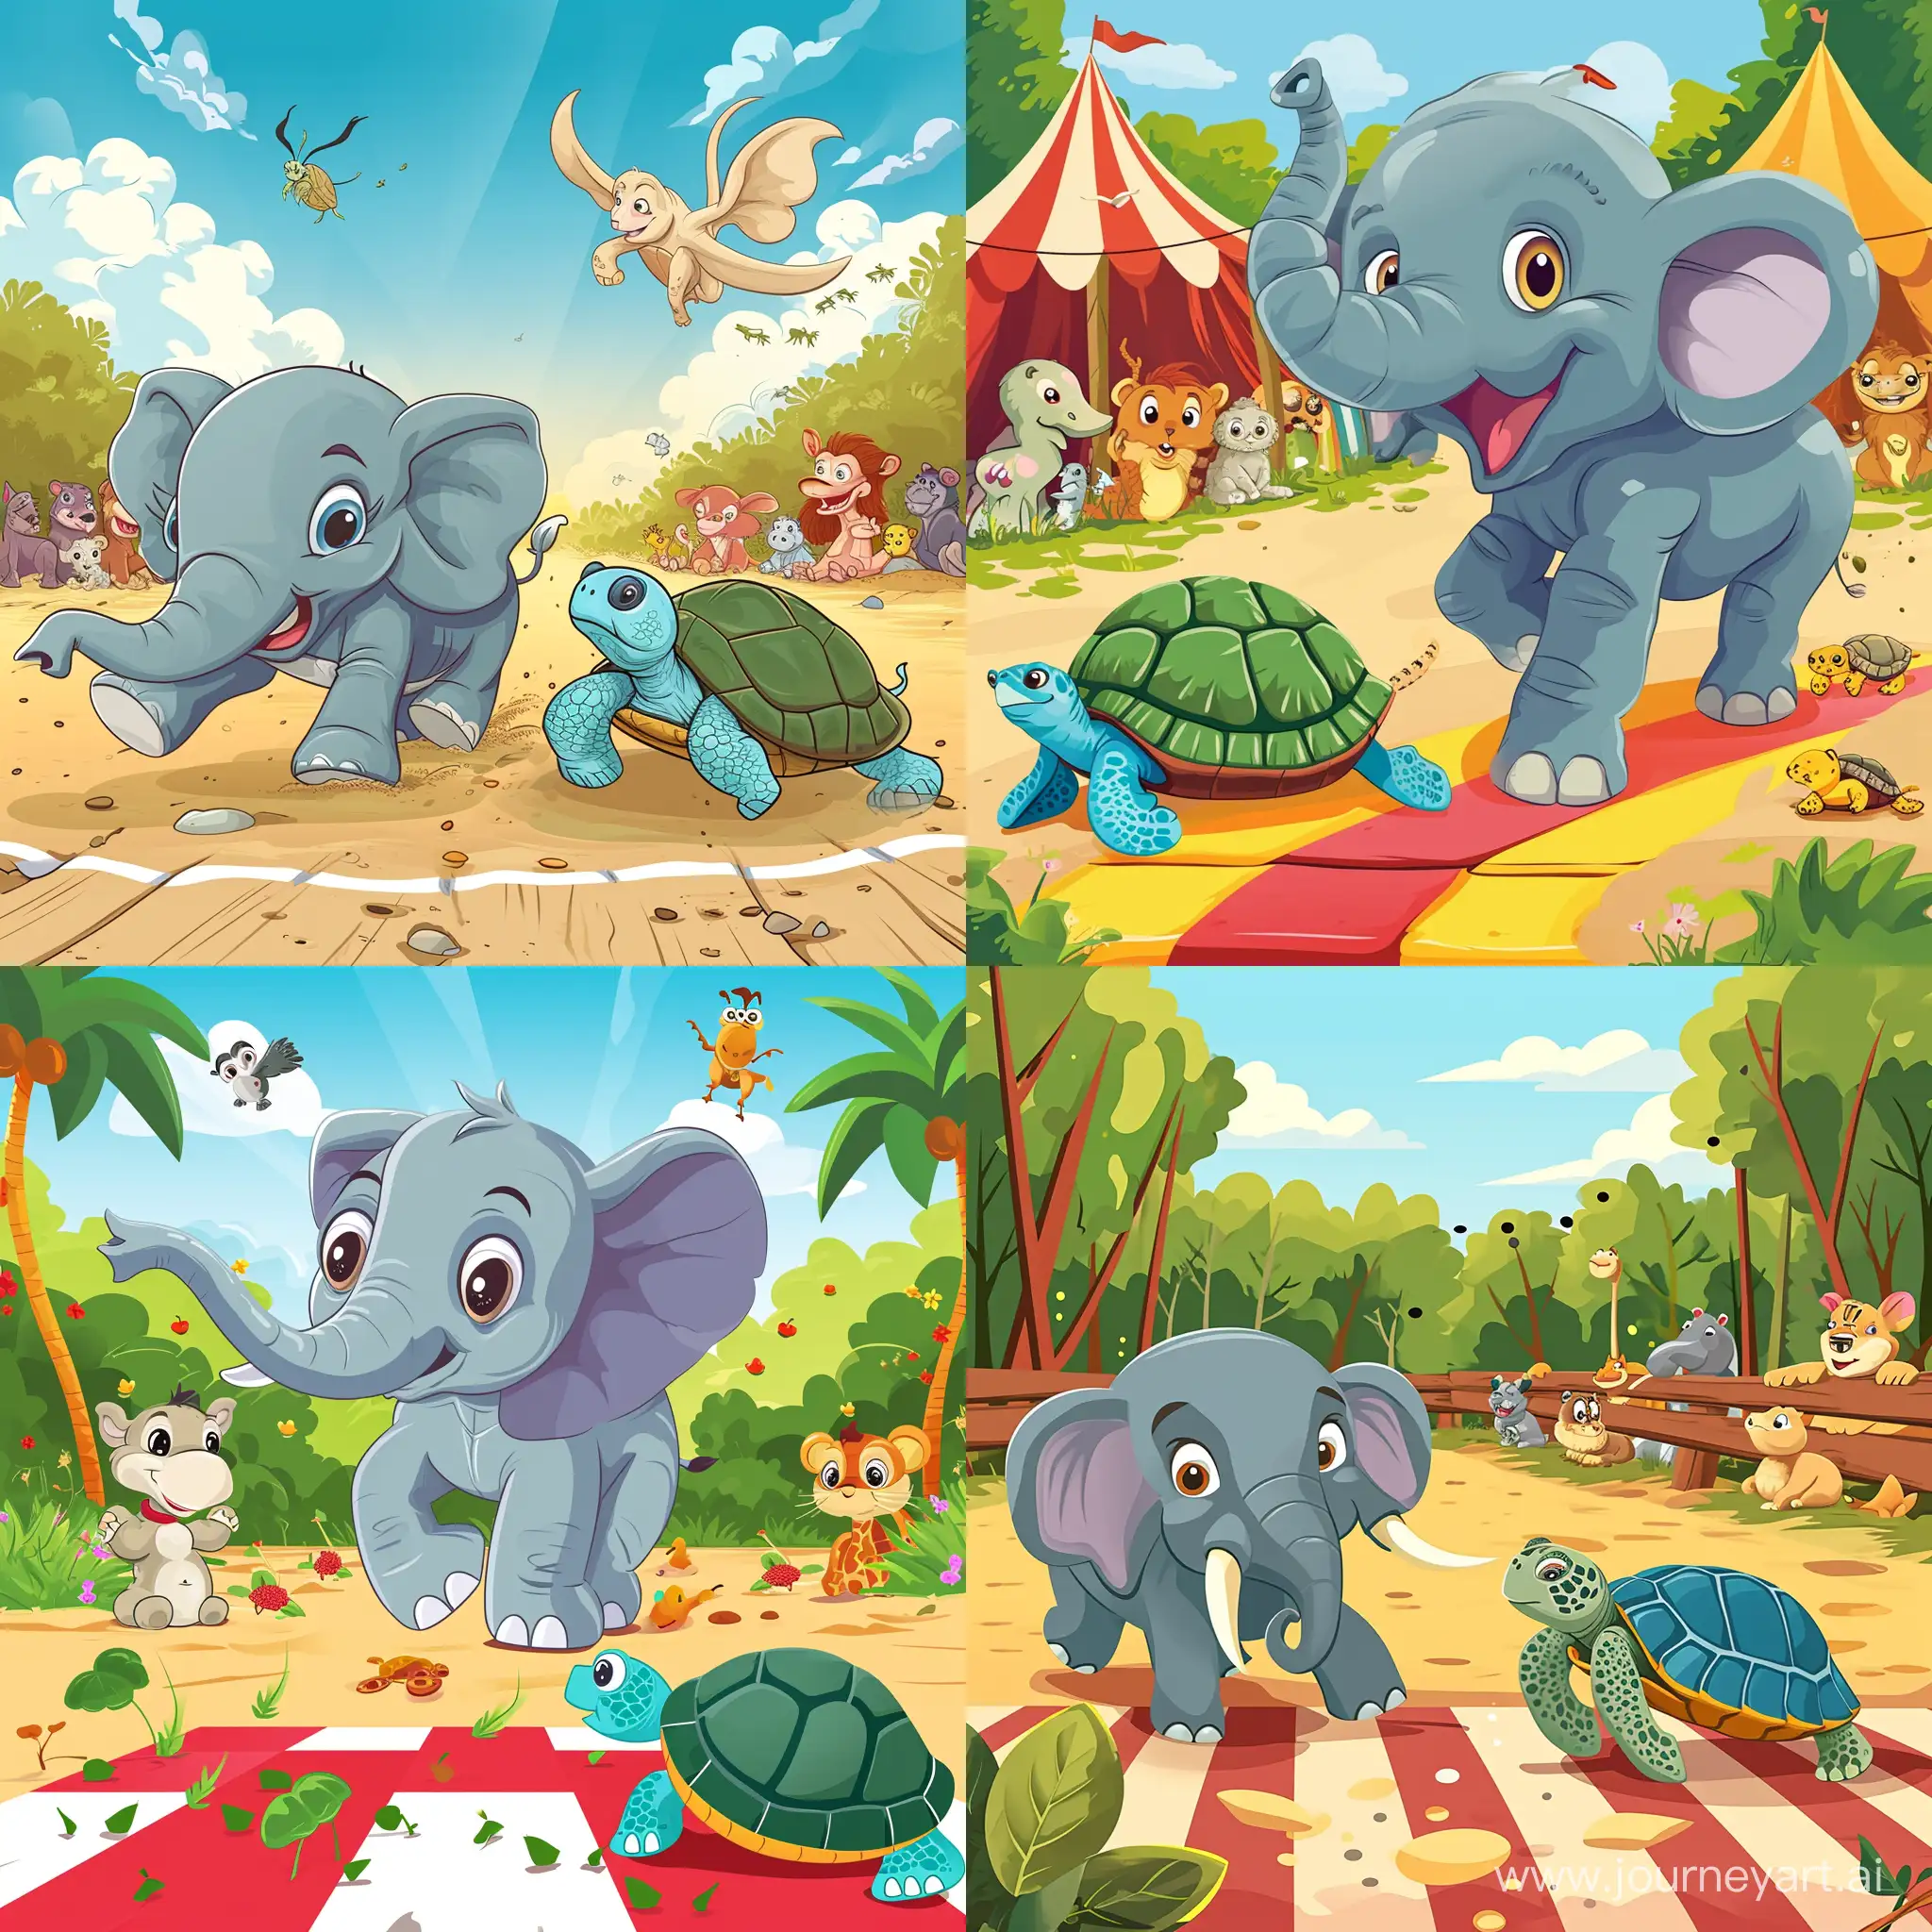 Cartoon-Animal-Race-Elephant-vs-Turtle-with-Animated-Audience